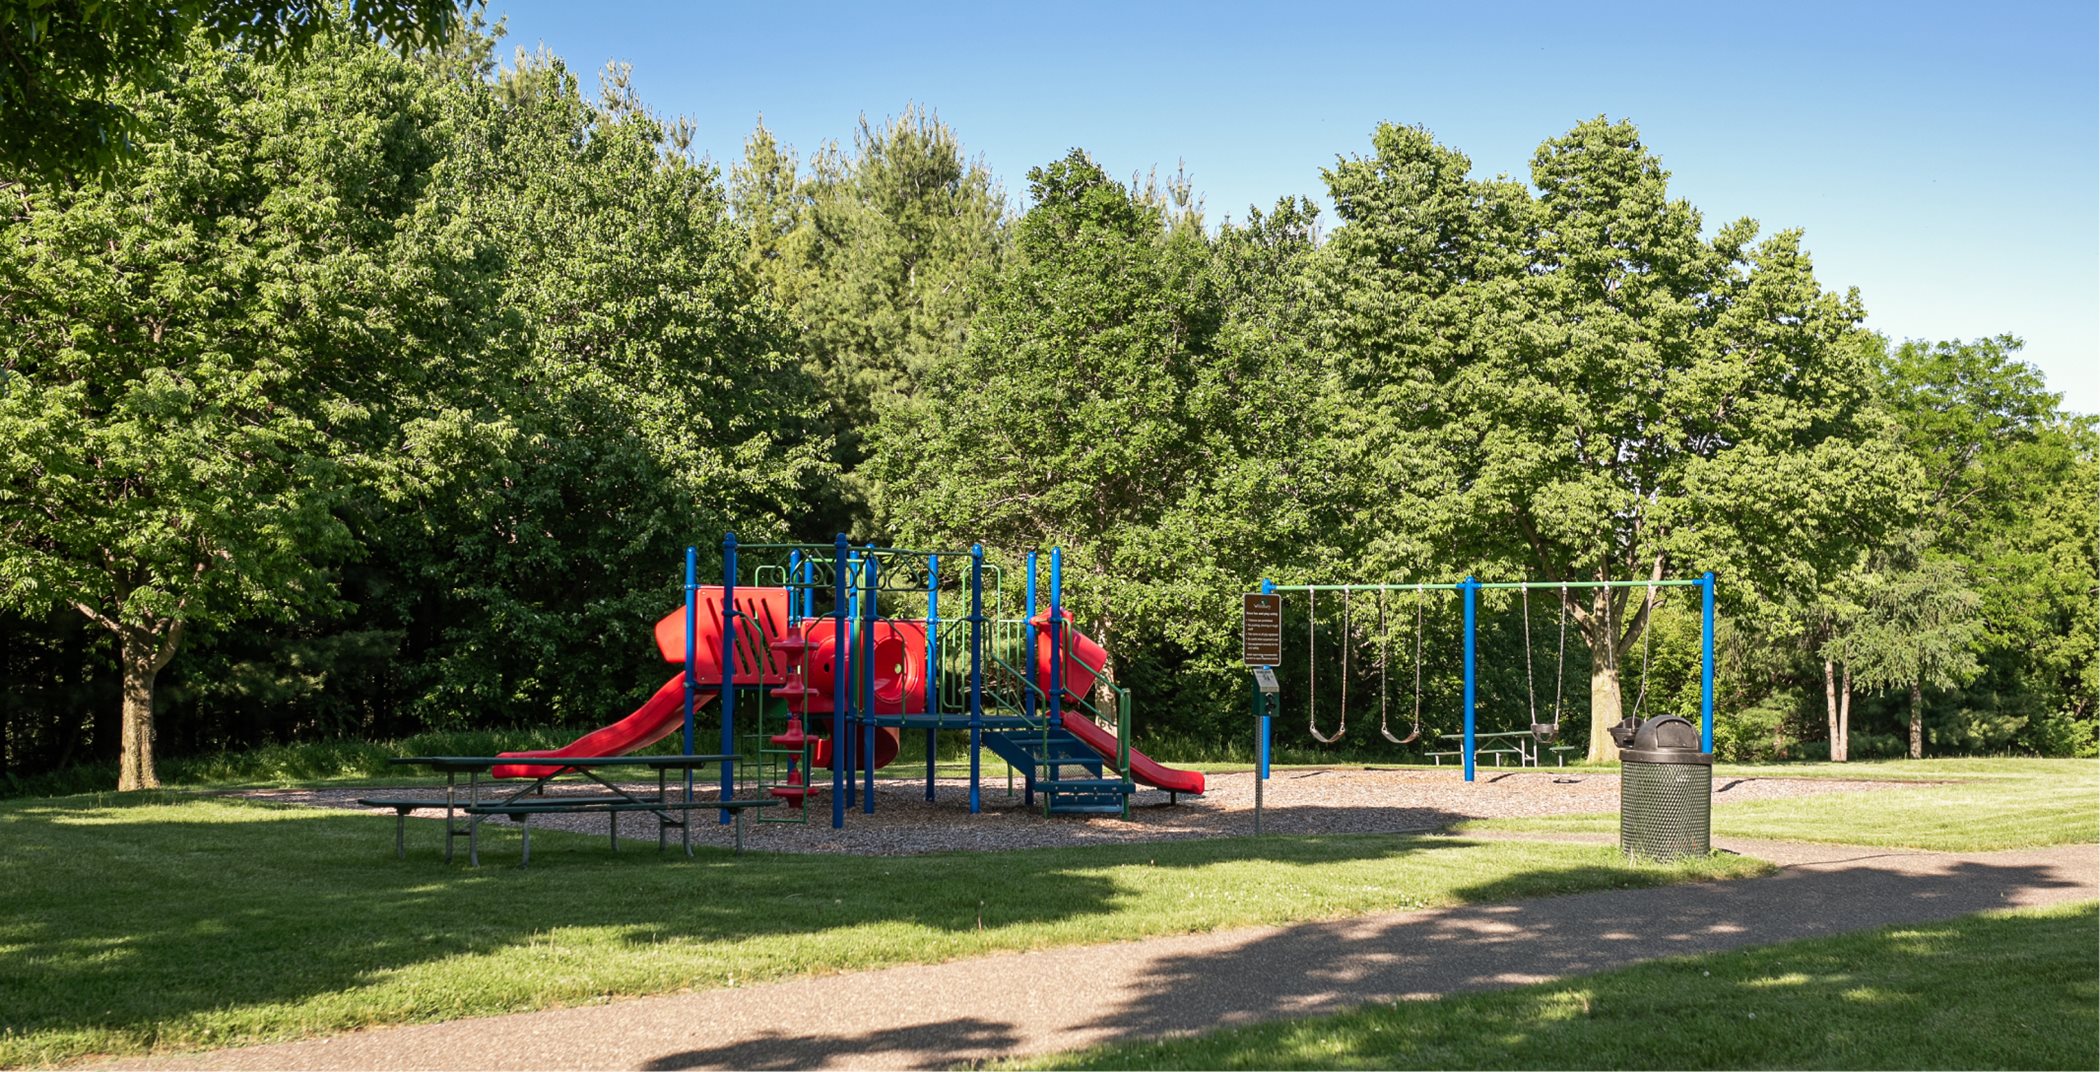 Woodbury City Playgrounds